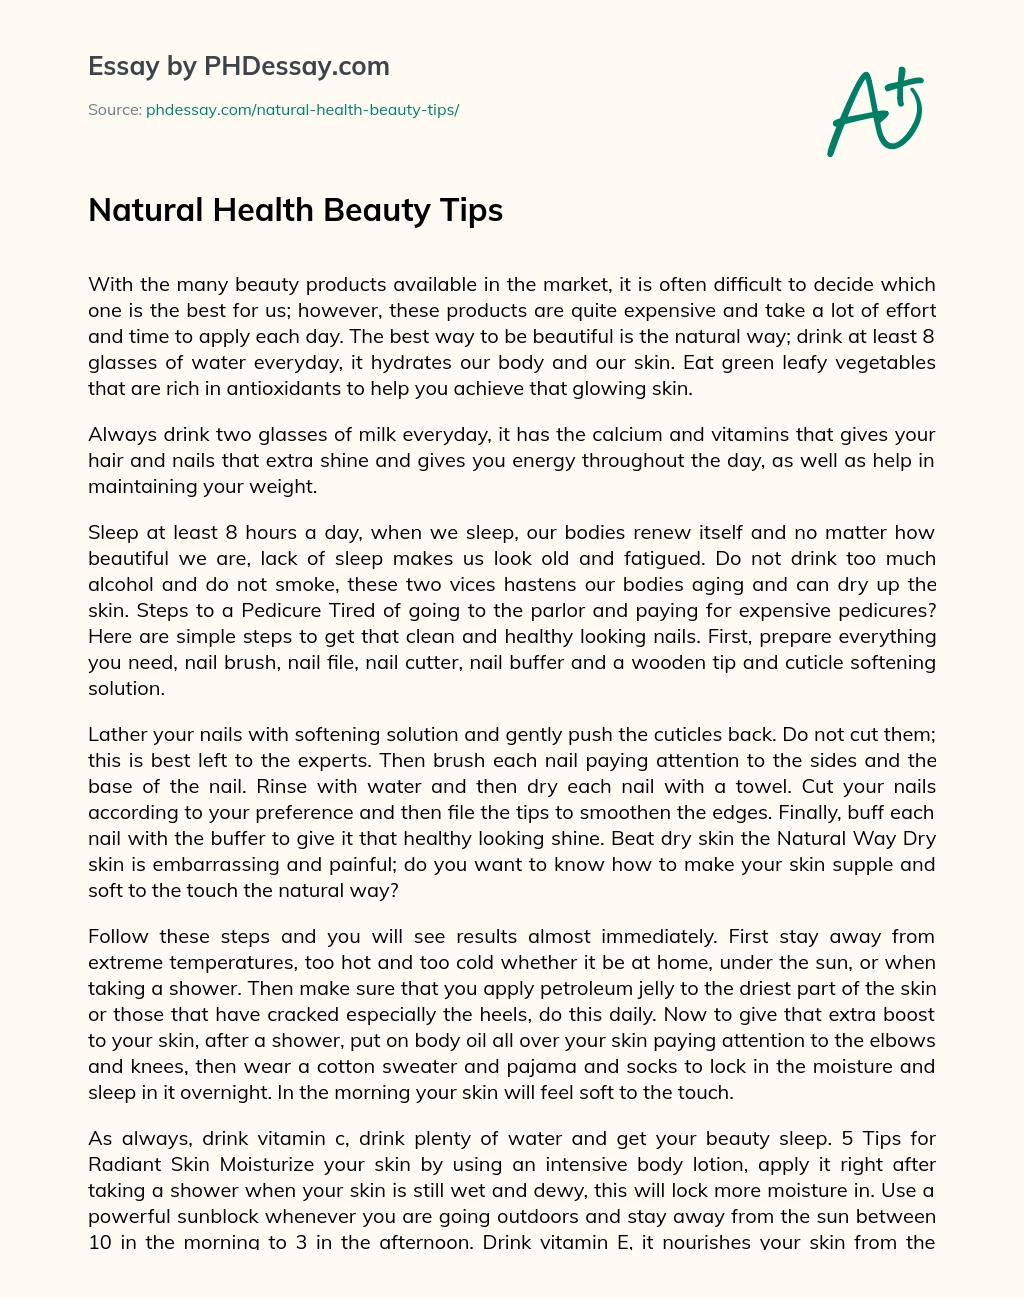 Natural Health Beauty Tips essay